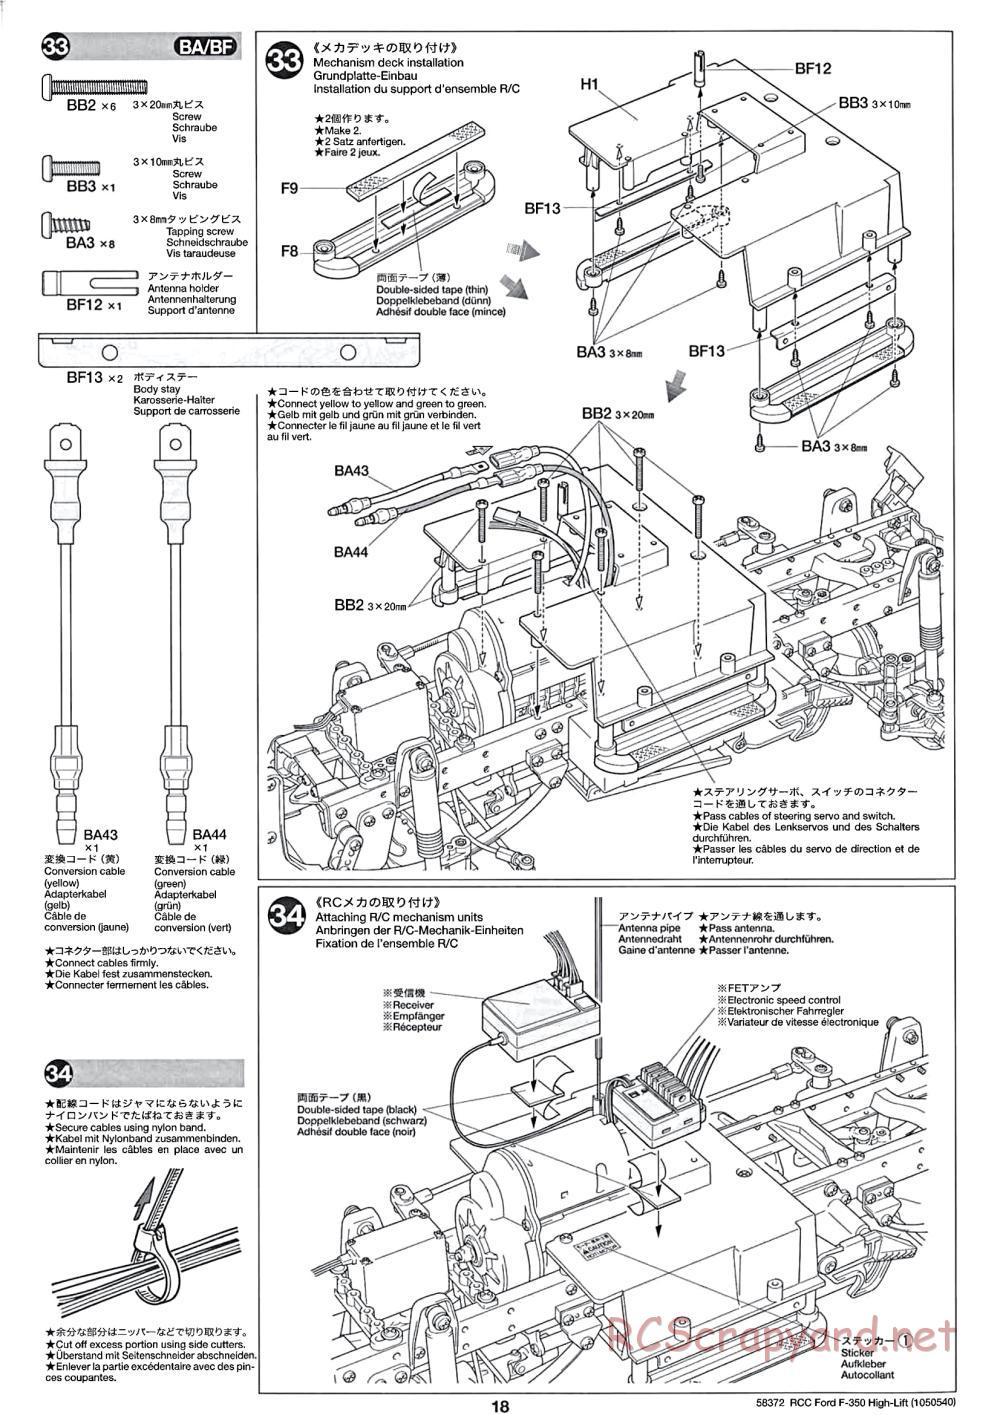 Tamiya - Ford F350 High-Lift Chassis - Manual - Page 18